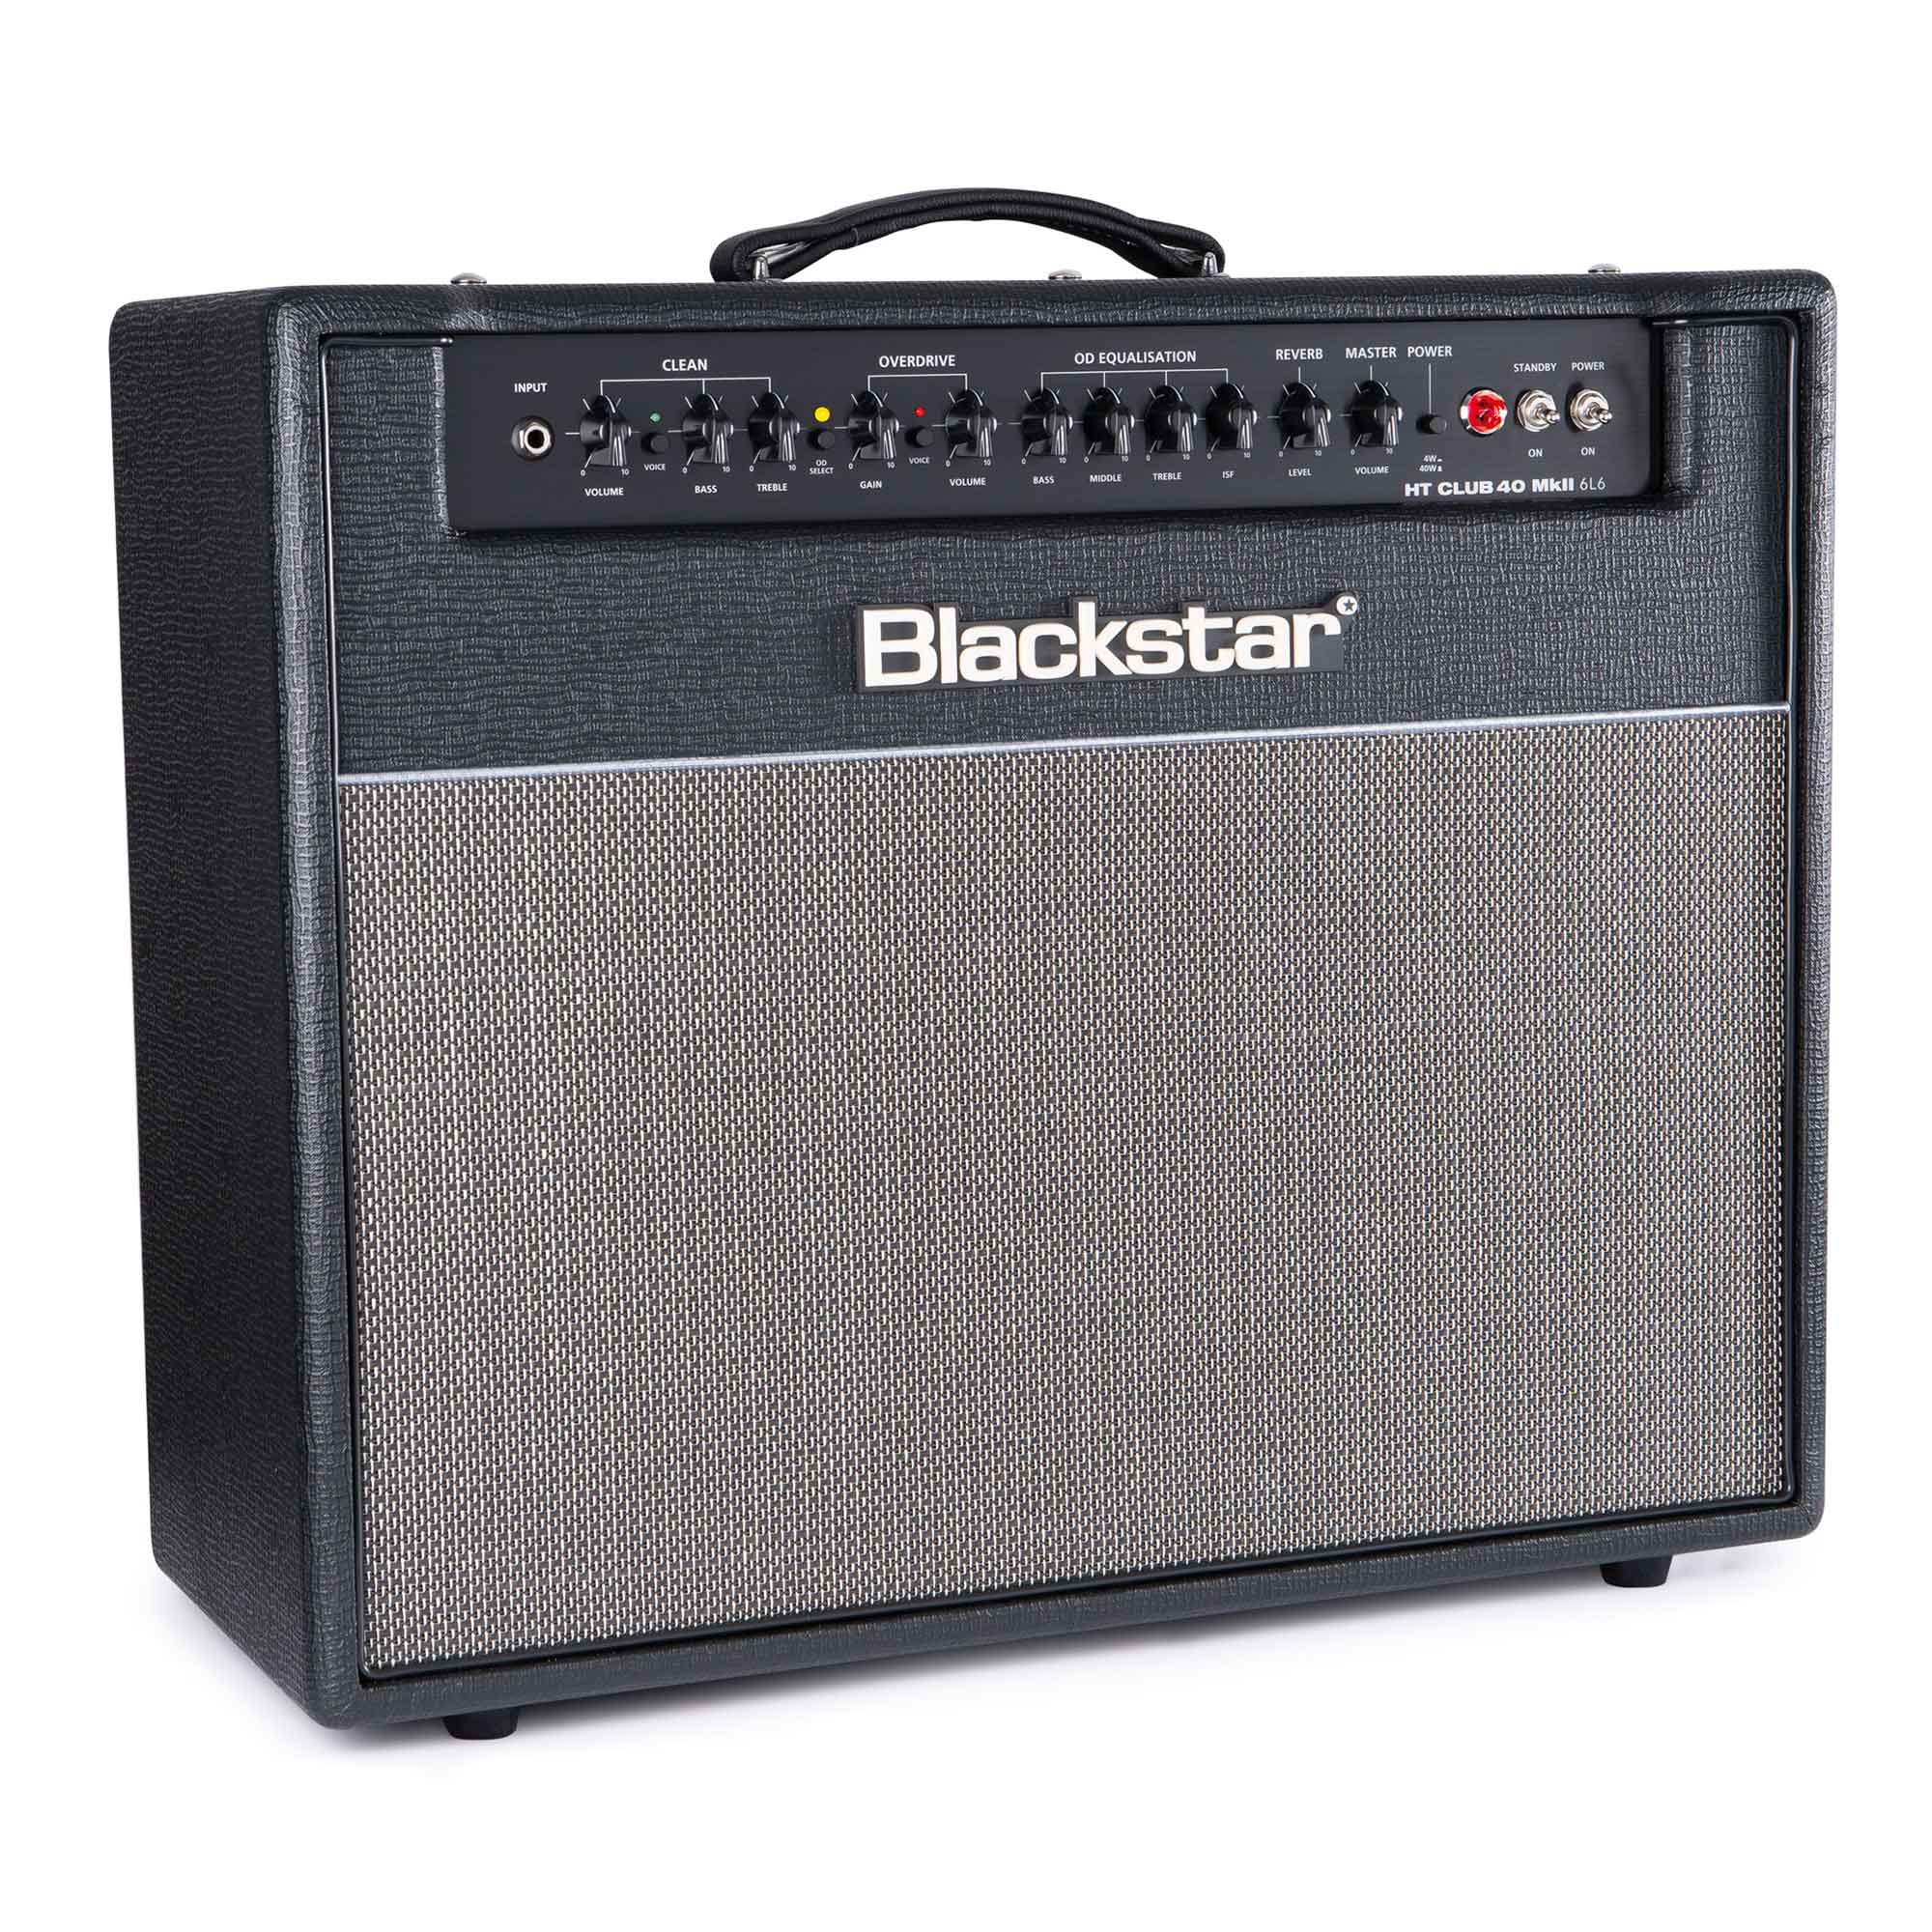 Blackstar Ht Club 40 Mkii 6l6 40w 1x12 Black - Electric guitar combo amp - Variation 1